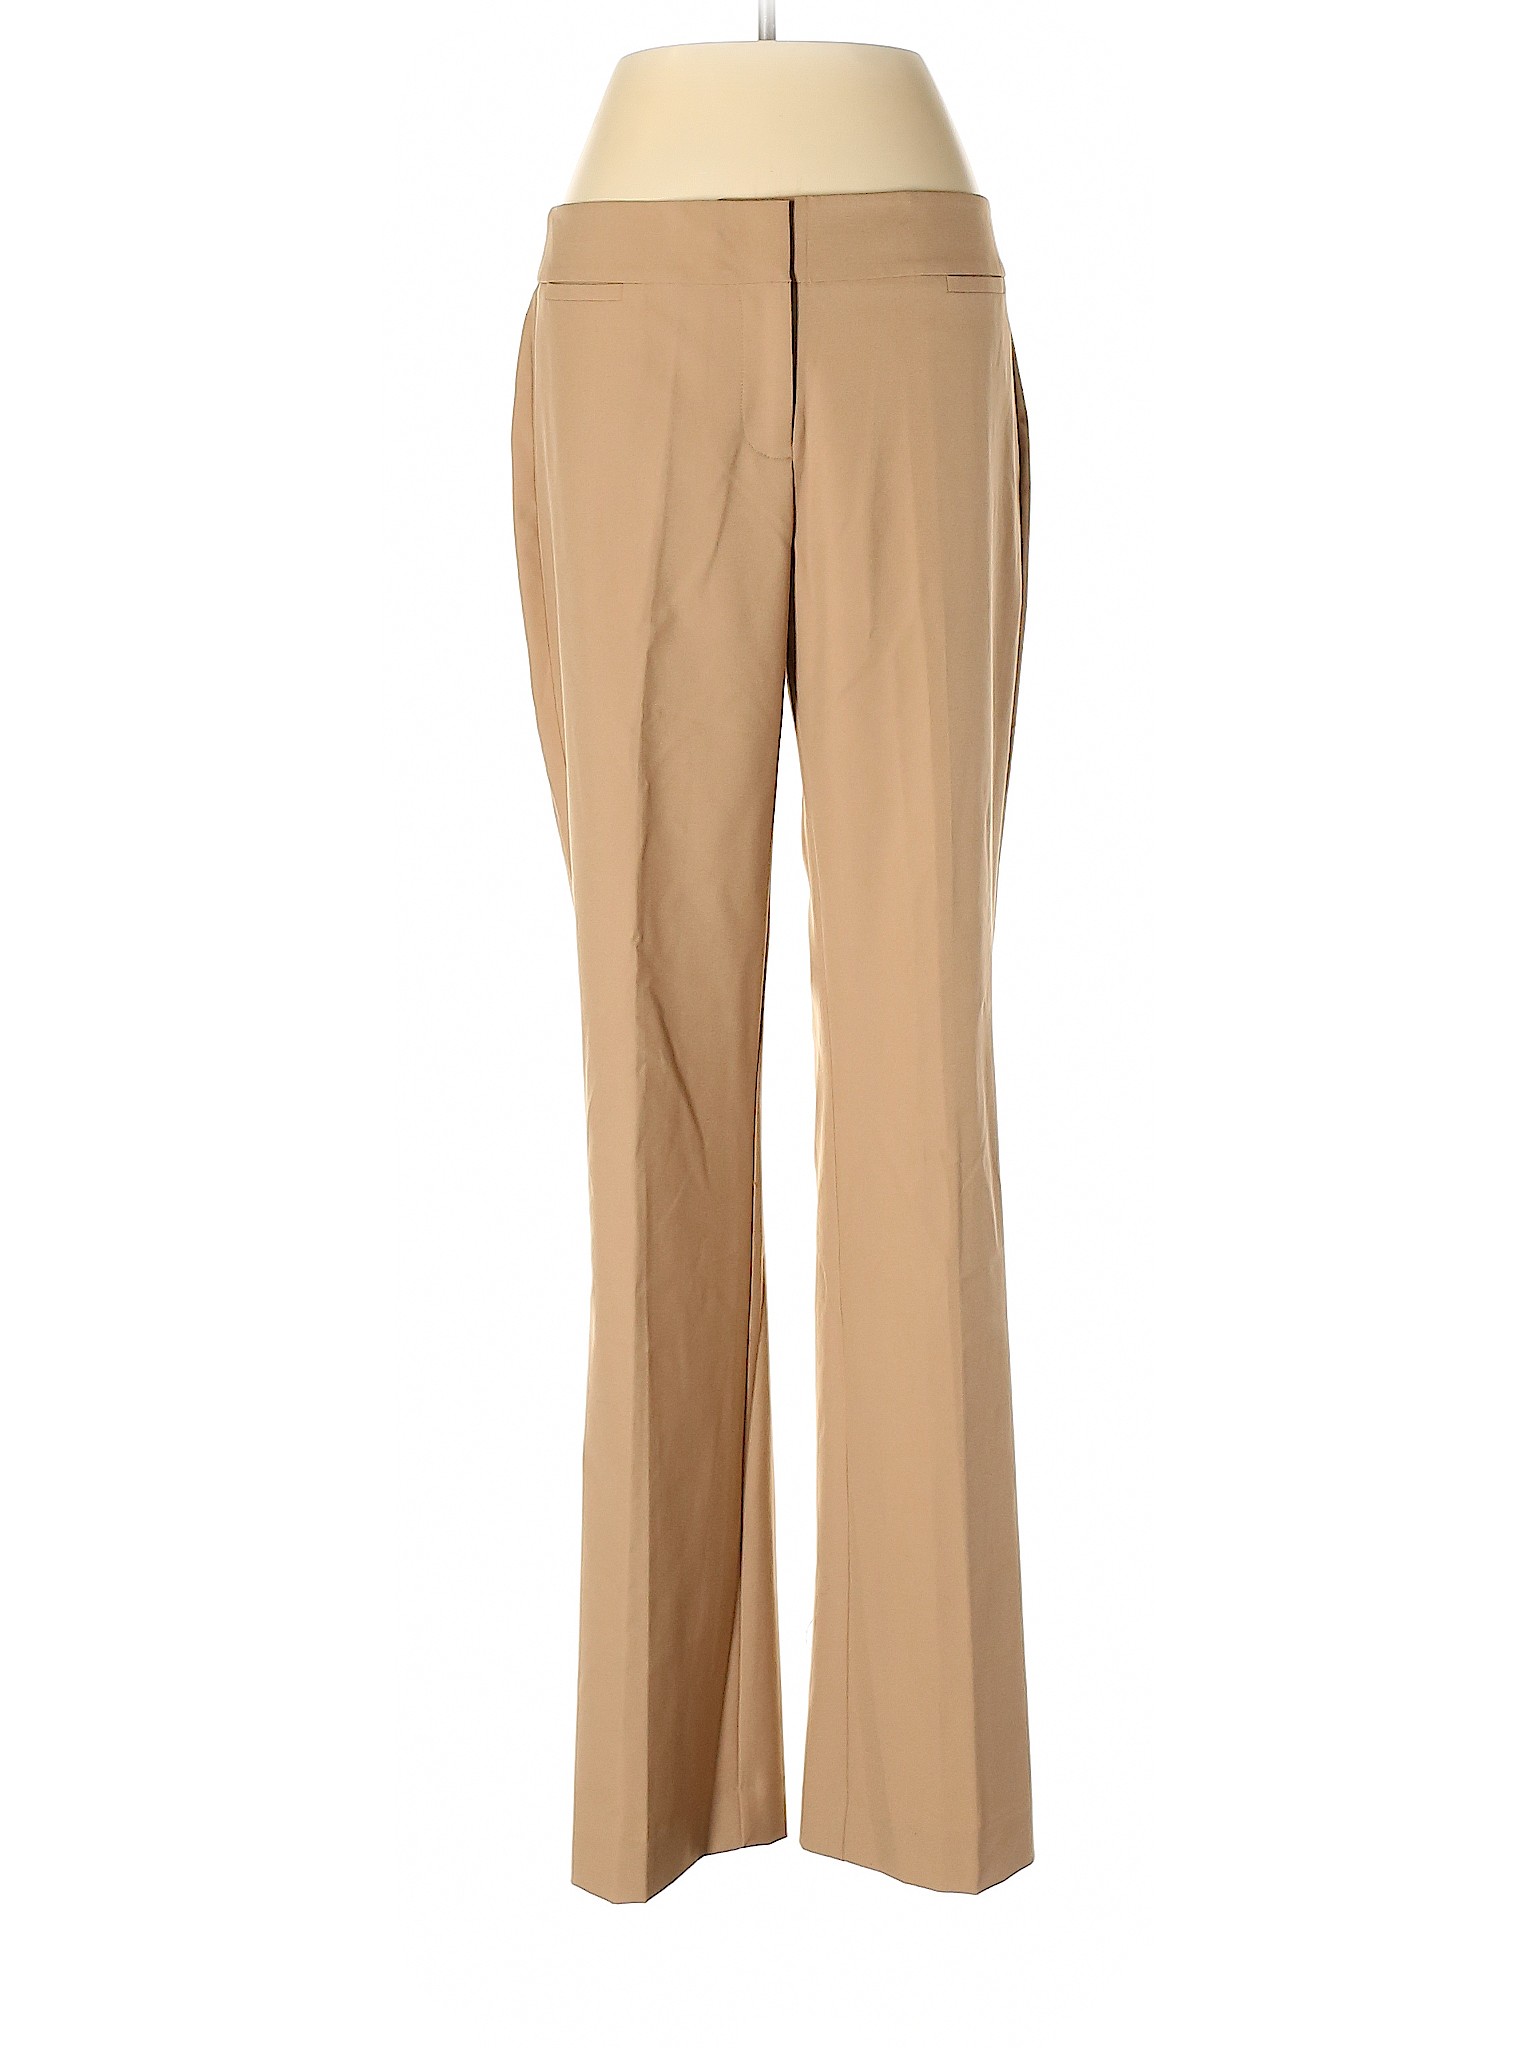 The Limited Women Brown Dress Pants 4 | eBay